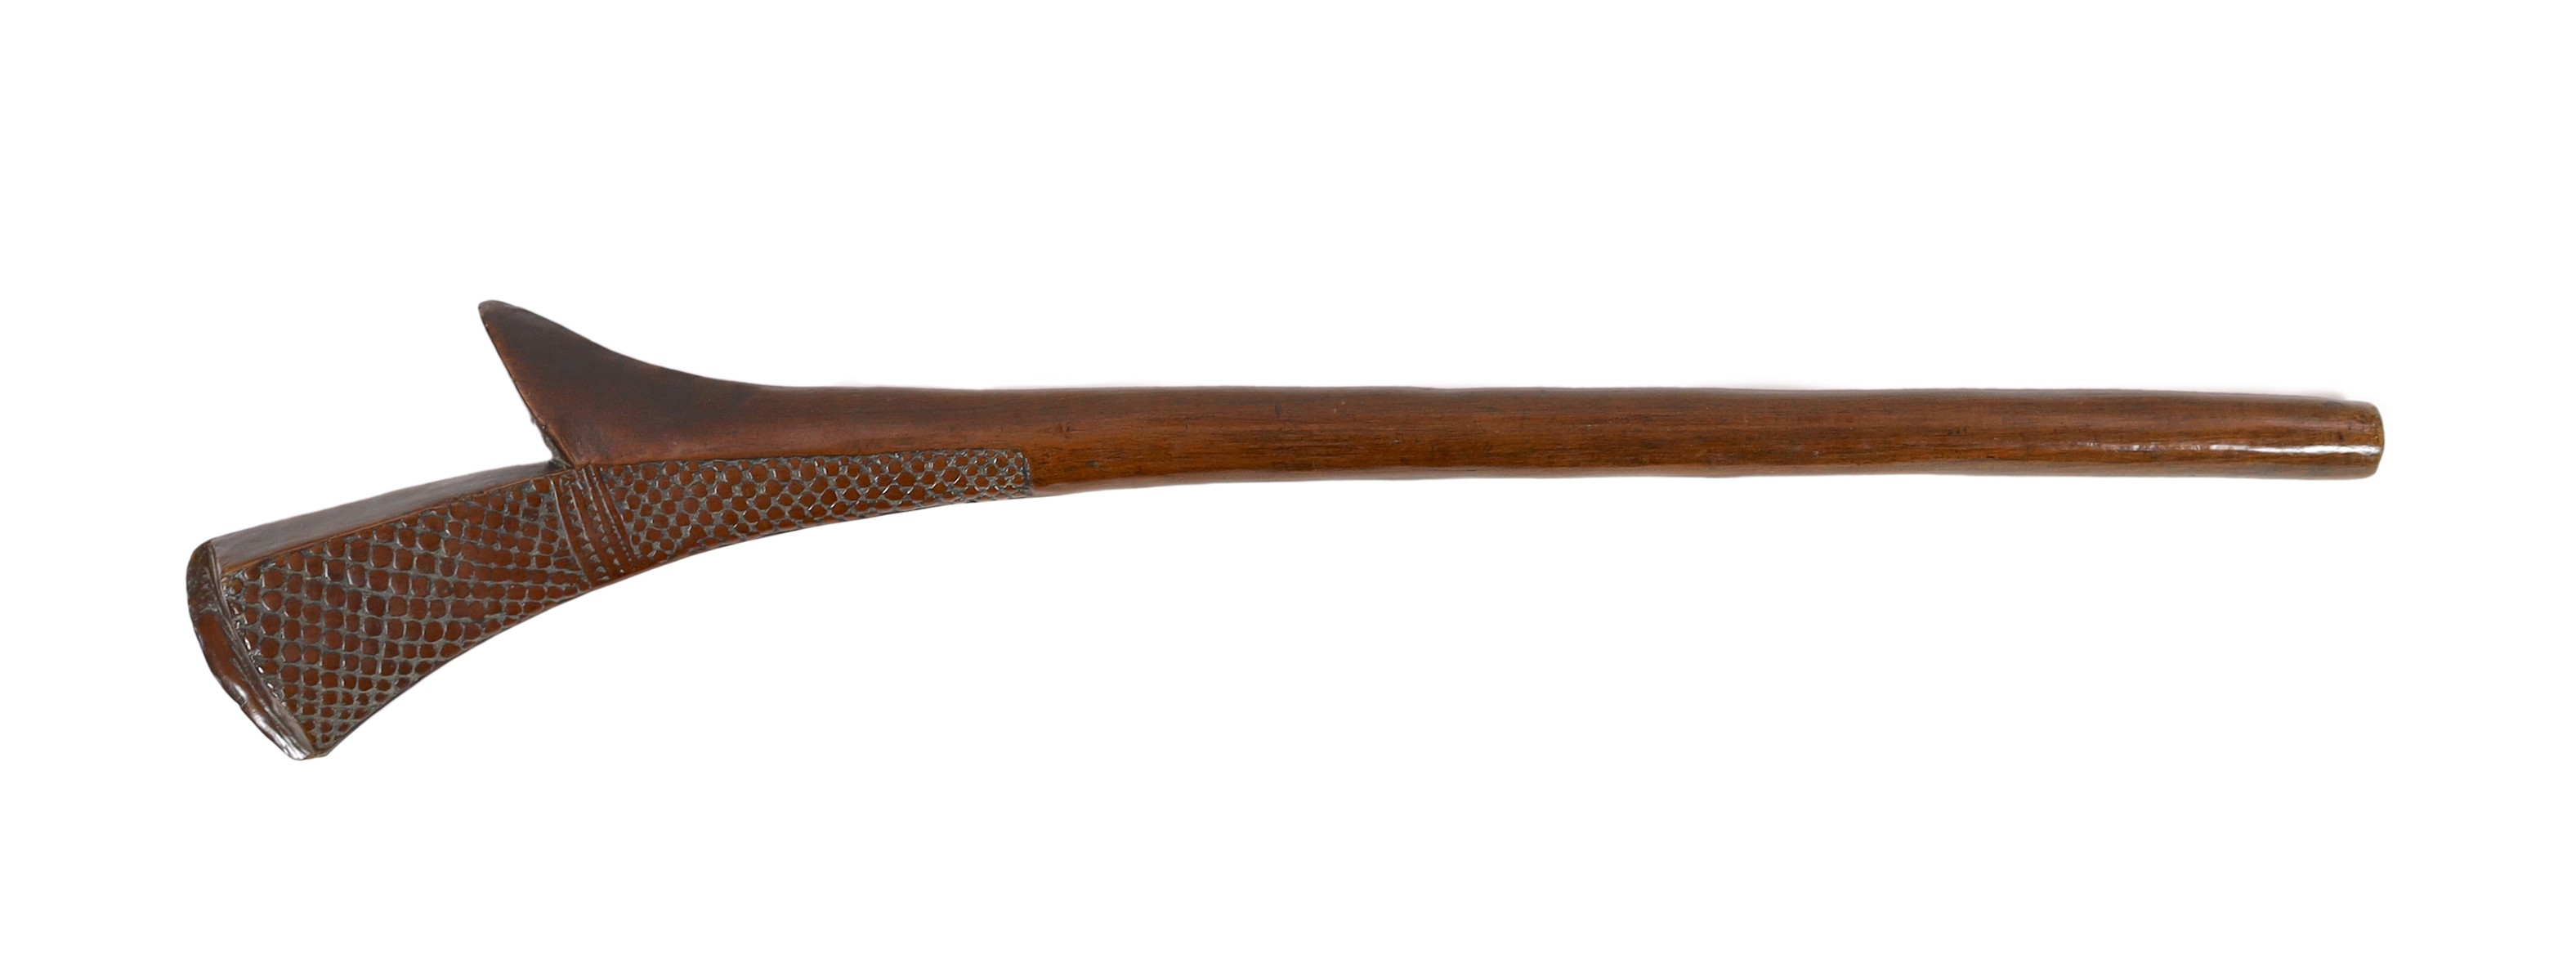 A Fijian hardwood bladed war club, 101cm long                                                                                                                                                                               